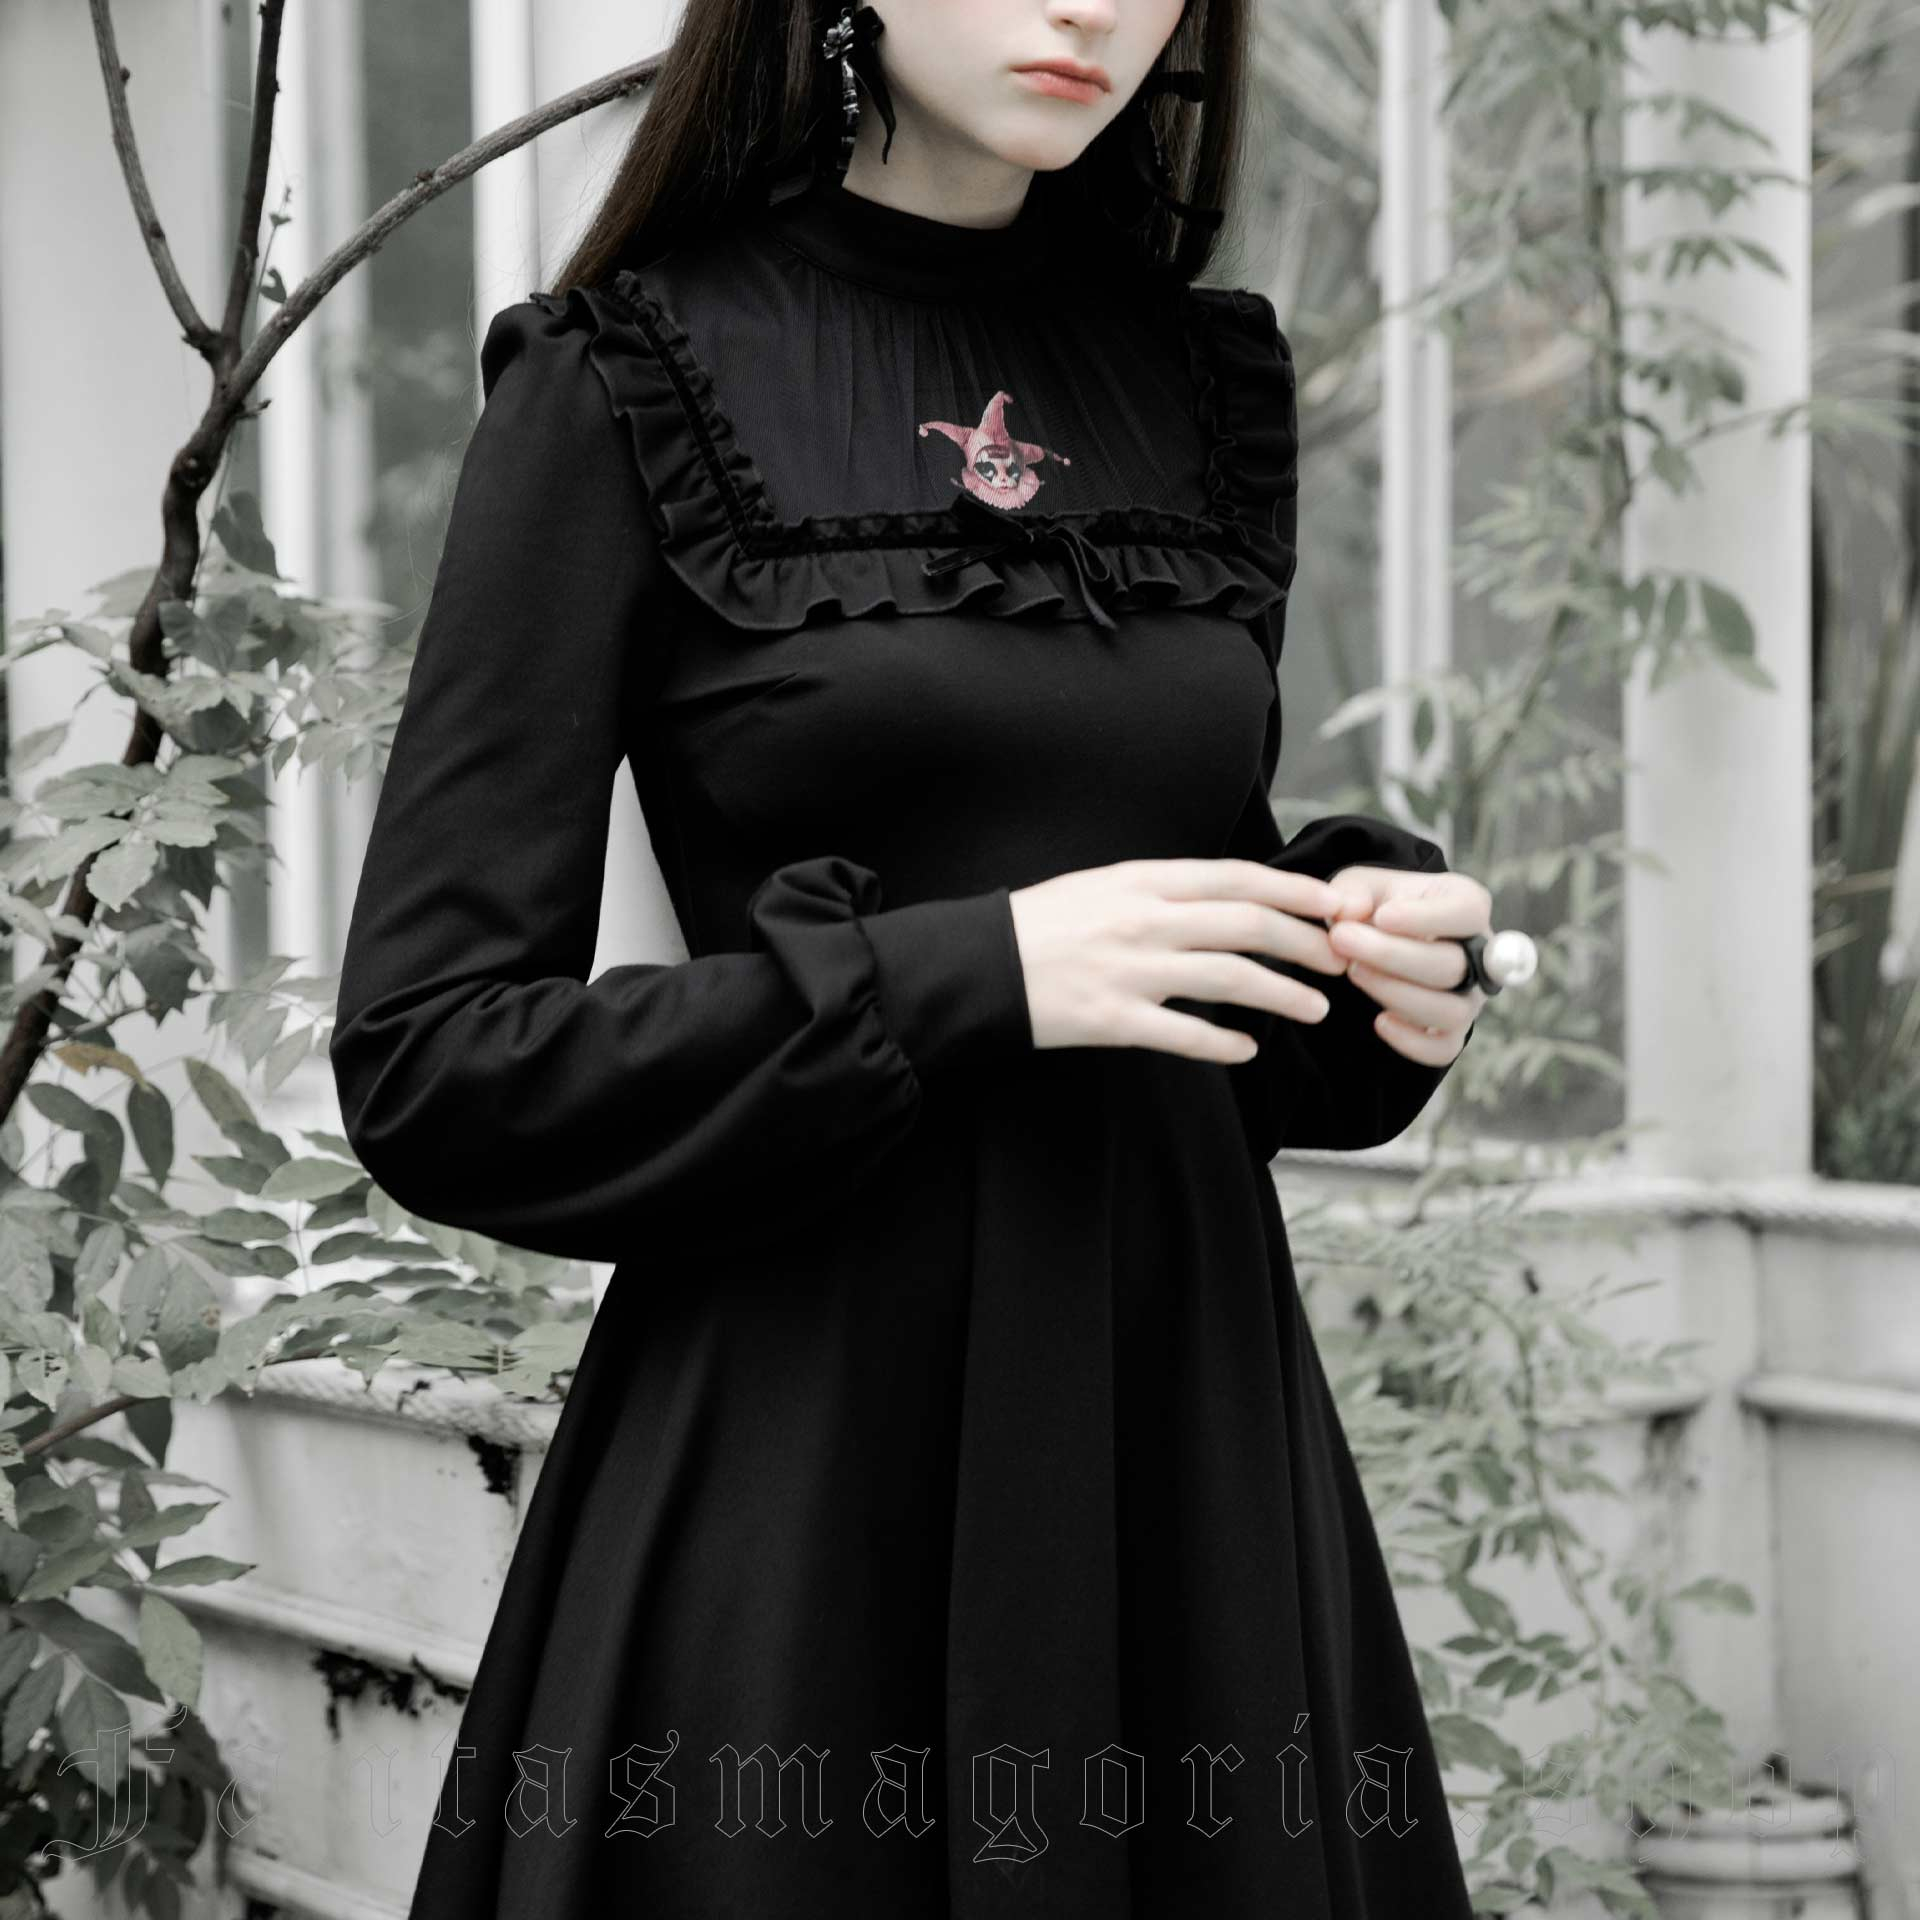 Harley Quinn Gothic Dress by PUNK RAVE brand